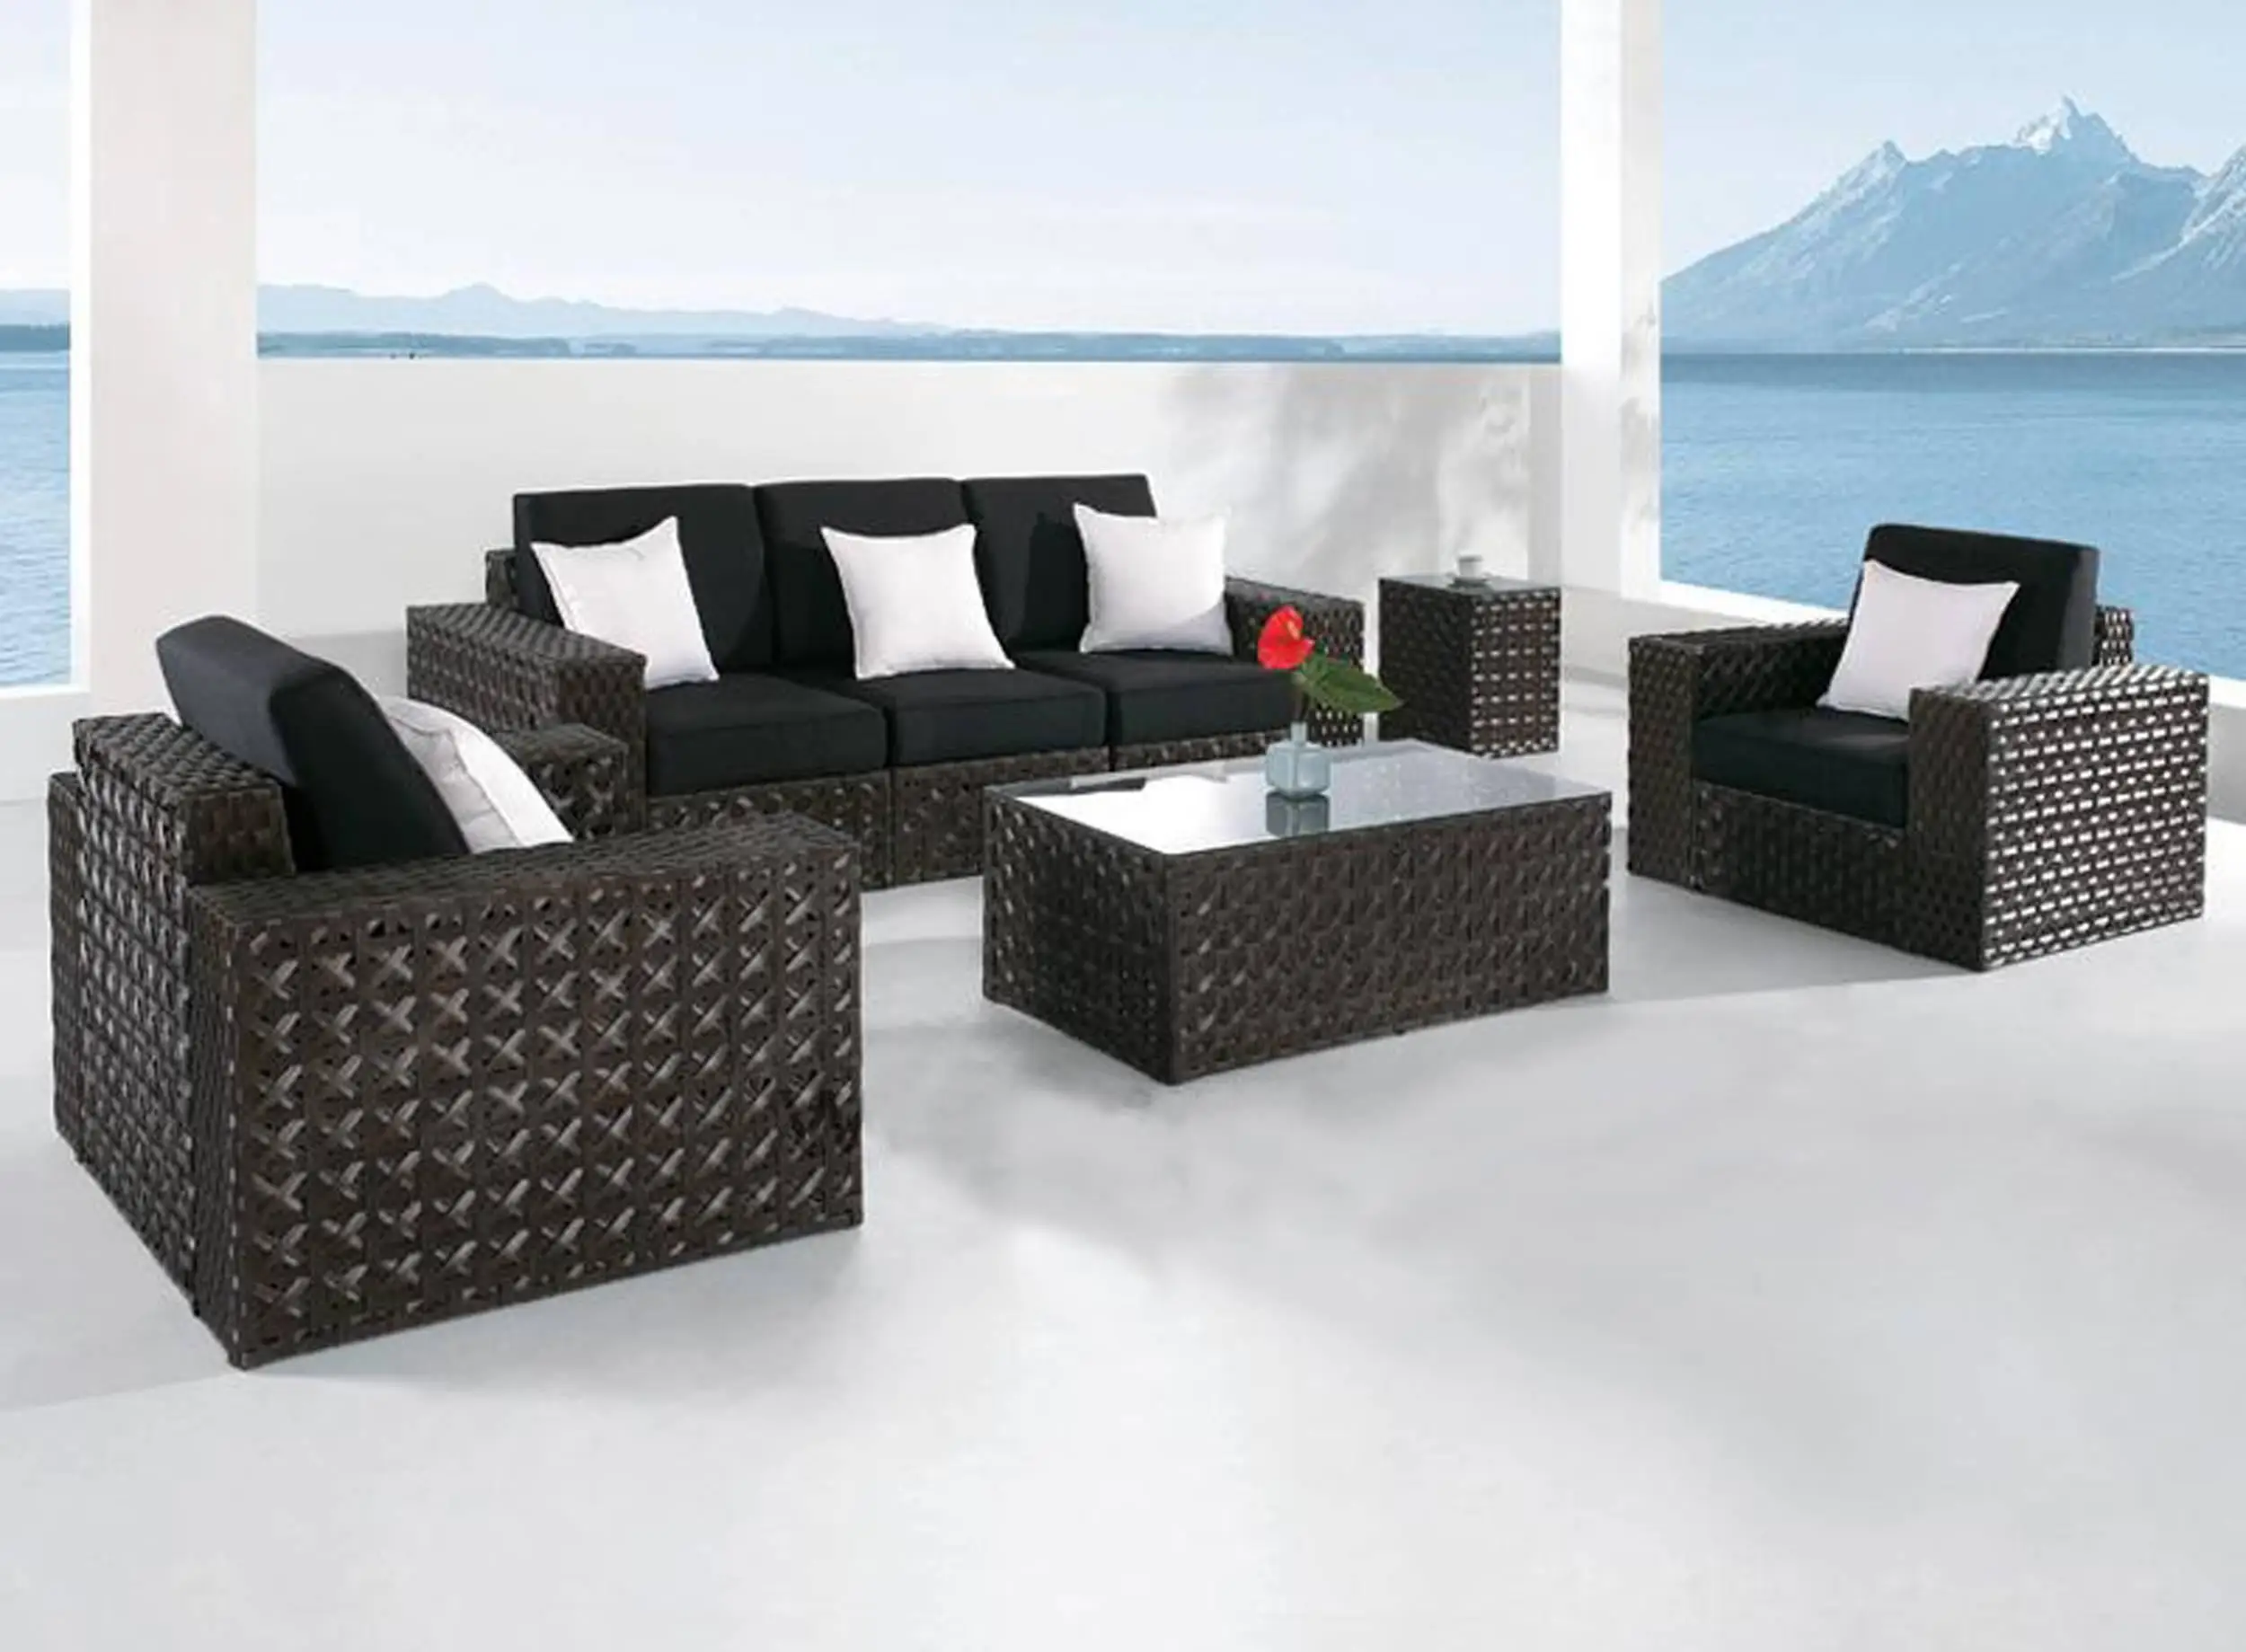 HOT SALE 7PCS modern comfortable high top patio garden furniture set rattan wicker gray rattan wicker furniture sofa set